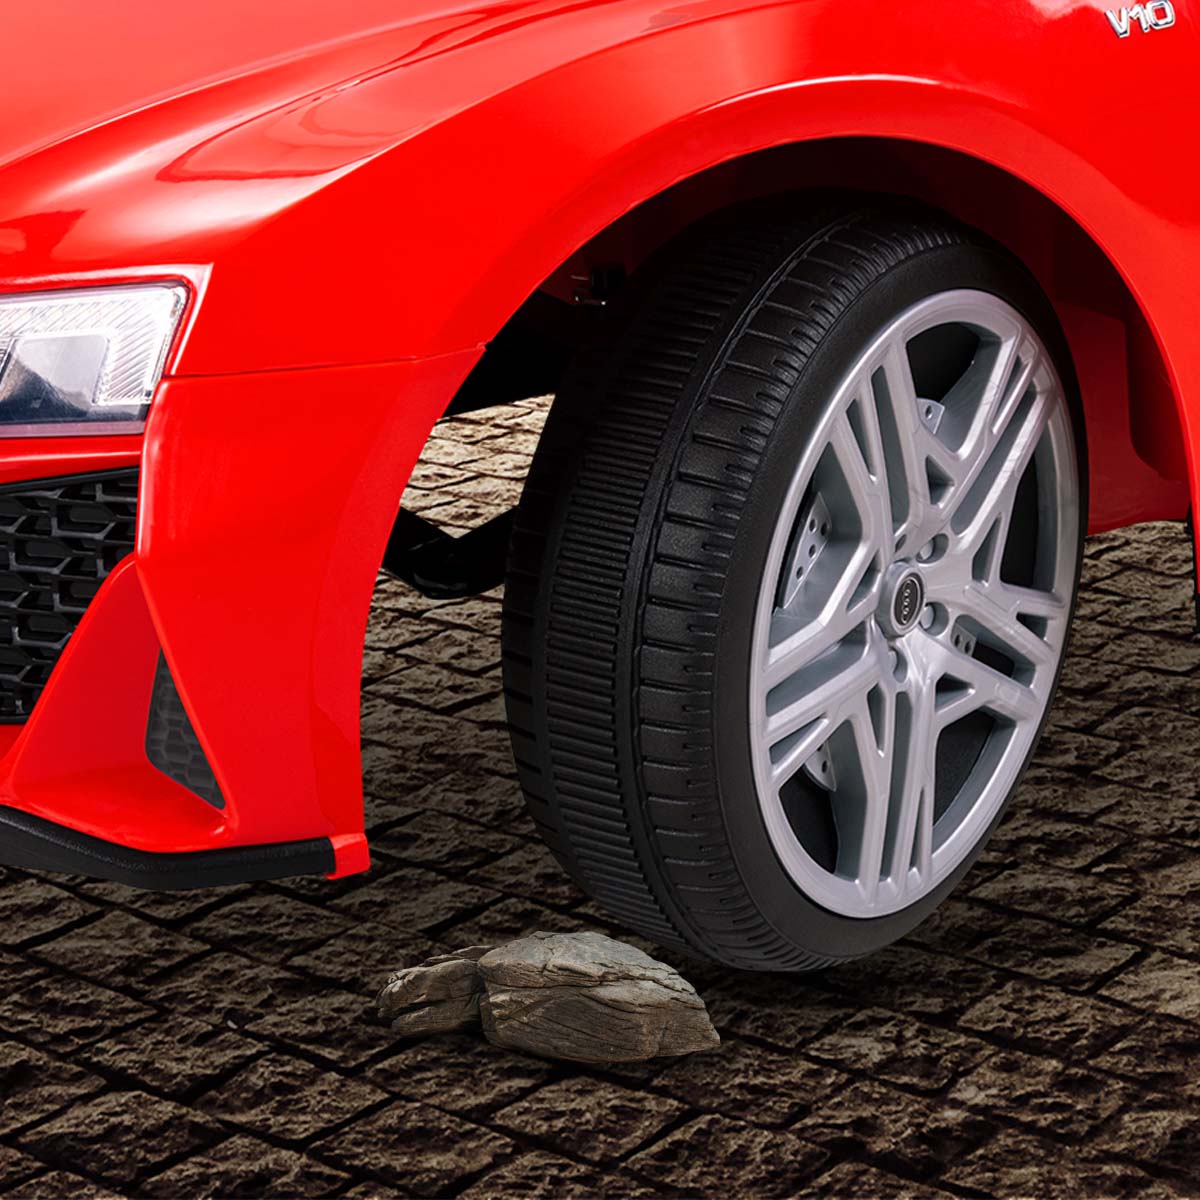 Kinder-Elektroauto Audi R8 Spyder lizenziert